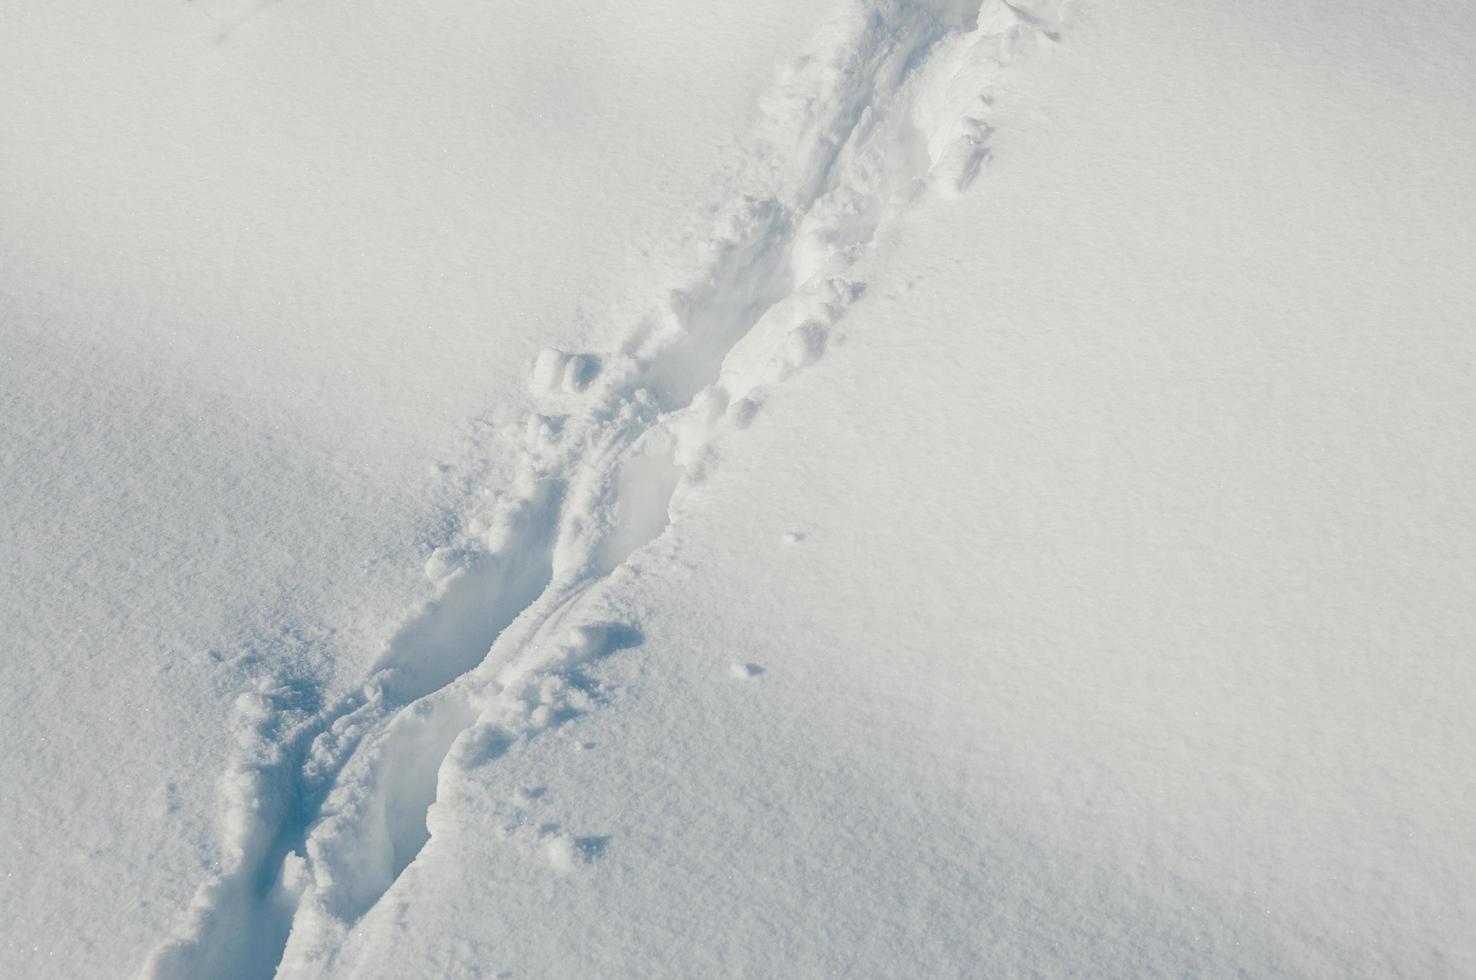 Animal footprints in deep snow photo